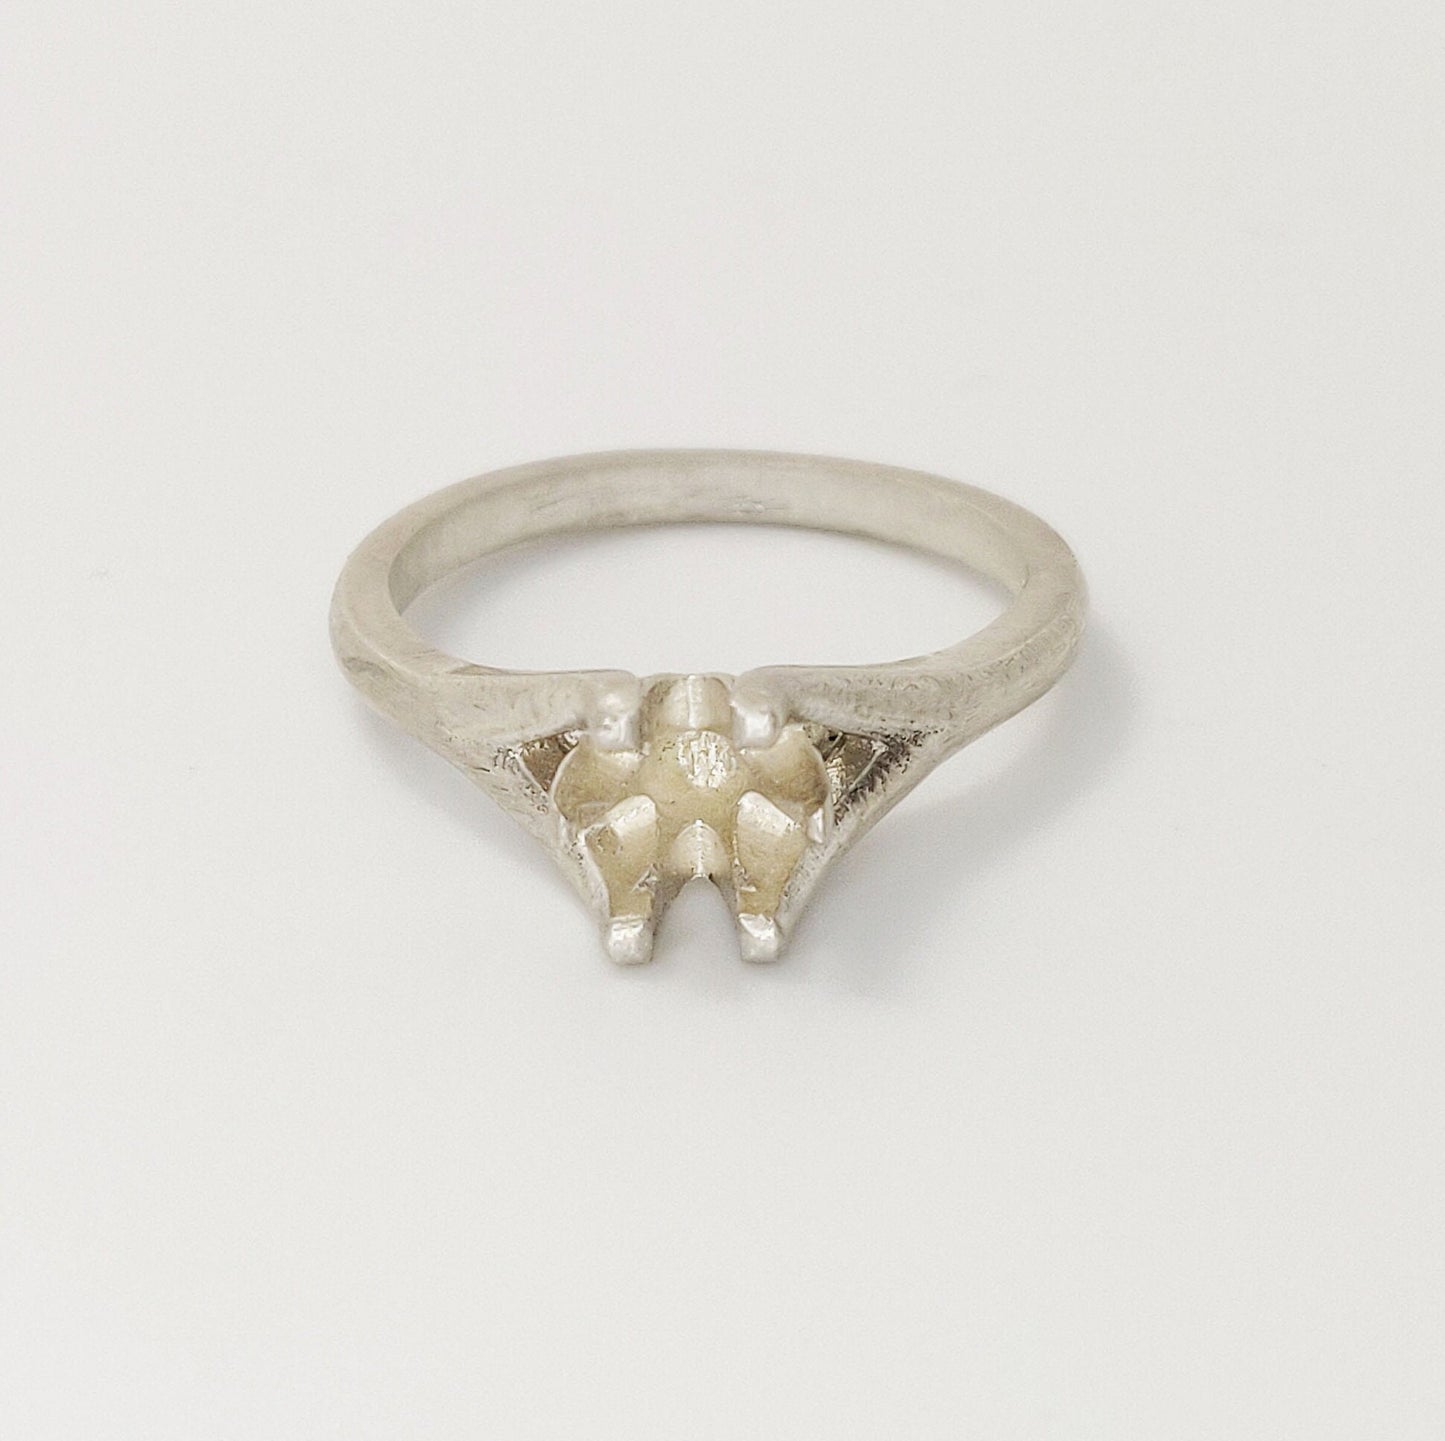 Six Prong Bezel Setting Ring. 5mm Round Prong Setting Cathedral Ring. Silver Cathedral Ring. Jewelry Making Supplies.